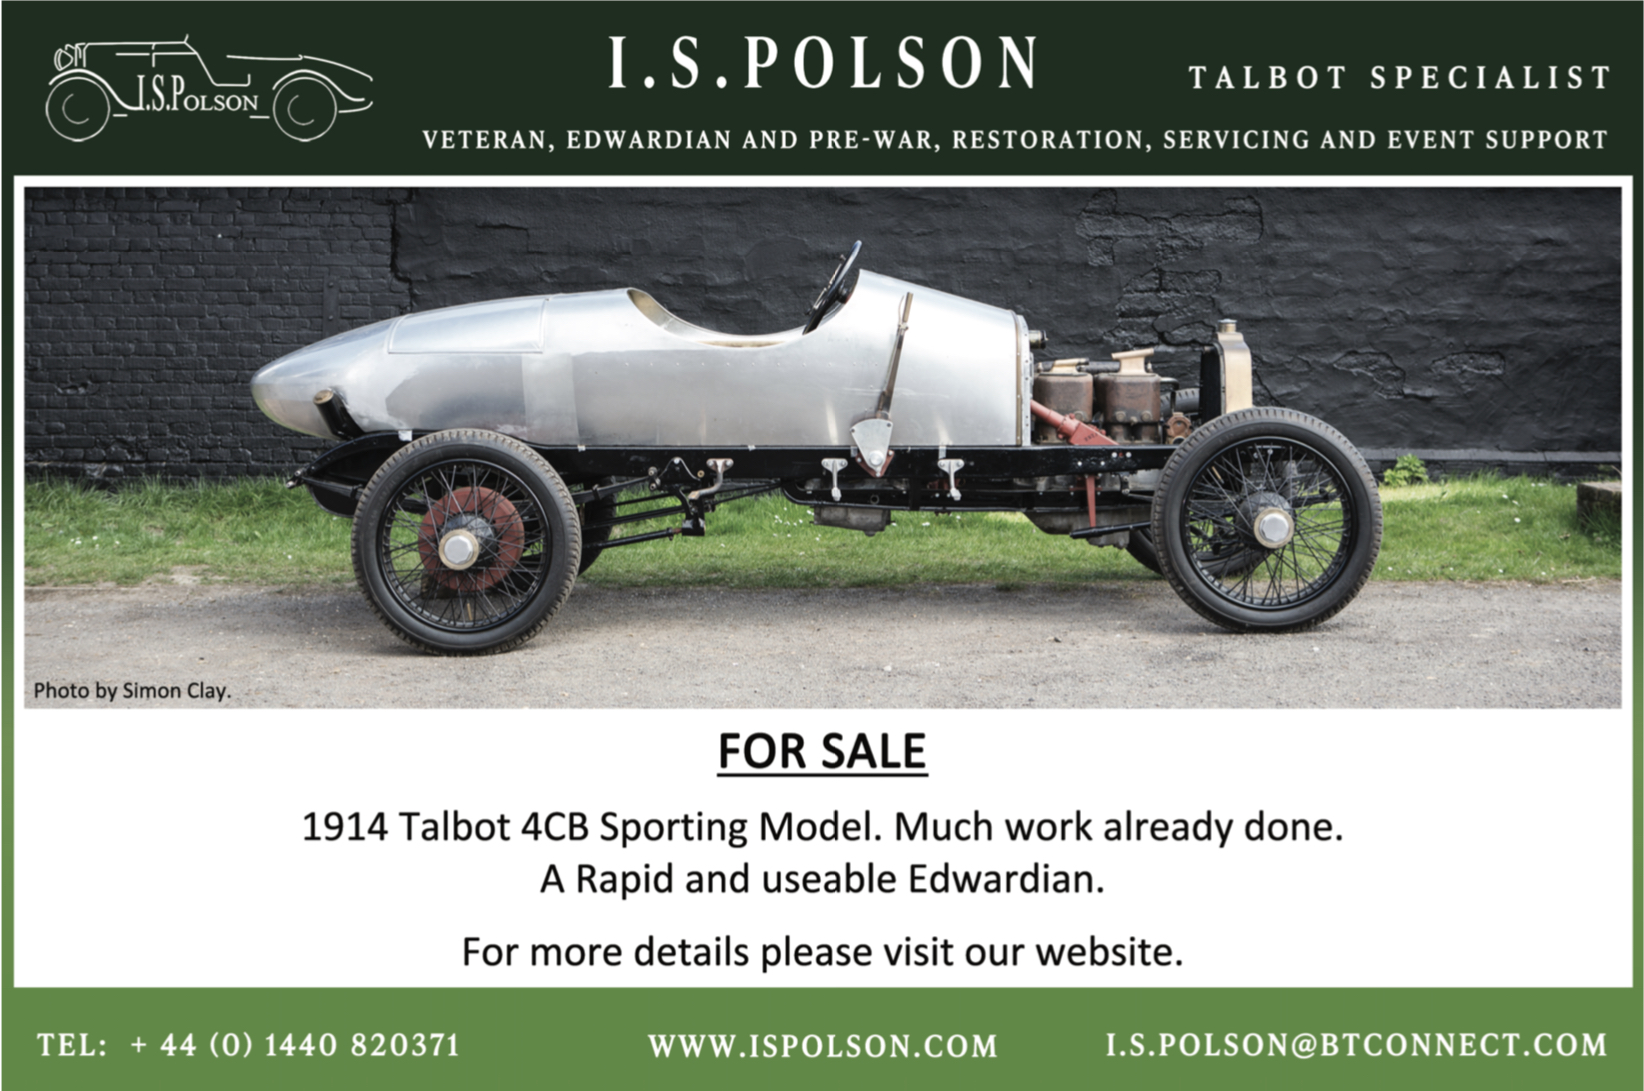 Talbot Cars Specialist - Veteran Edwardian pre-war car auto specialists, servicing, restoration, event support,